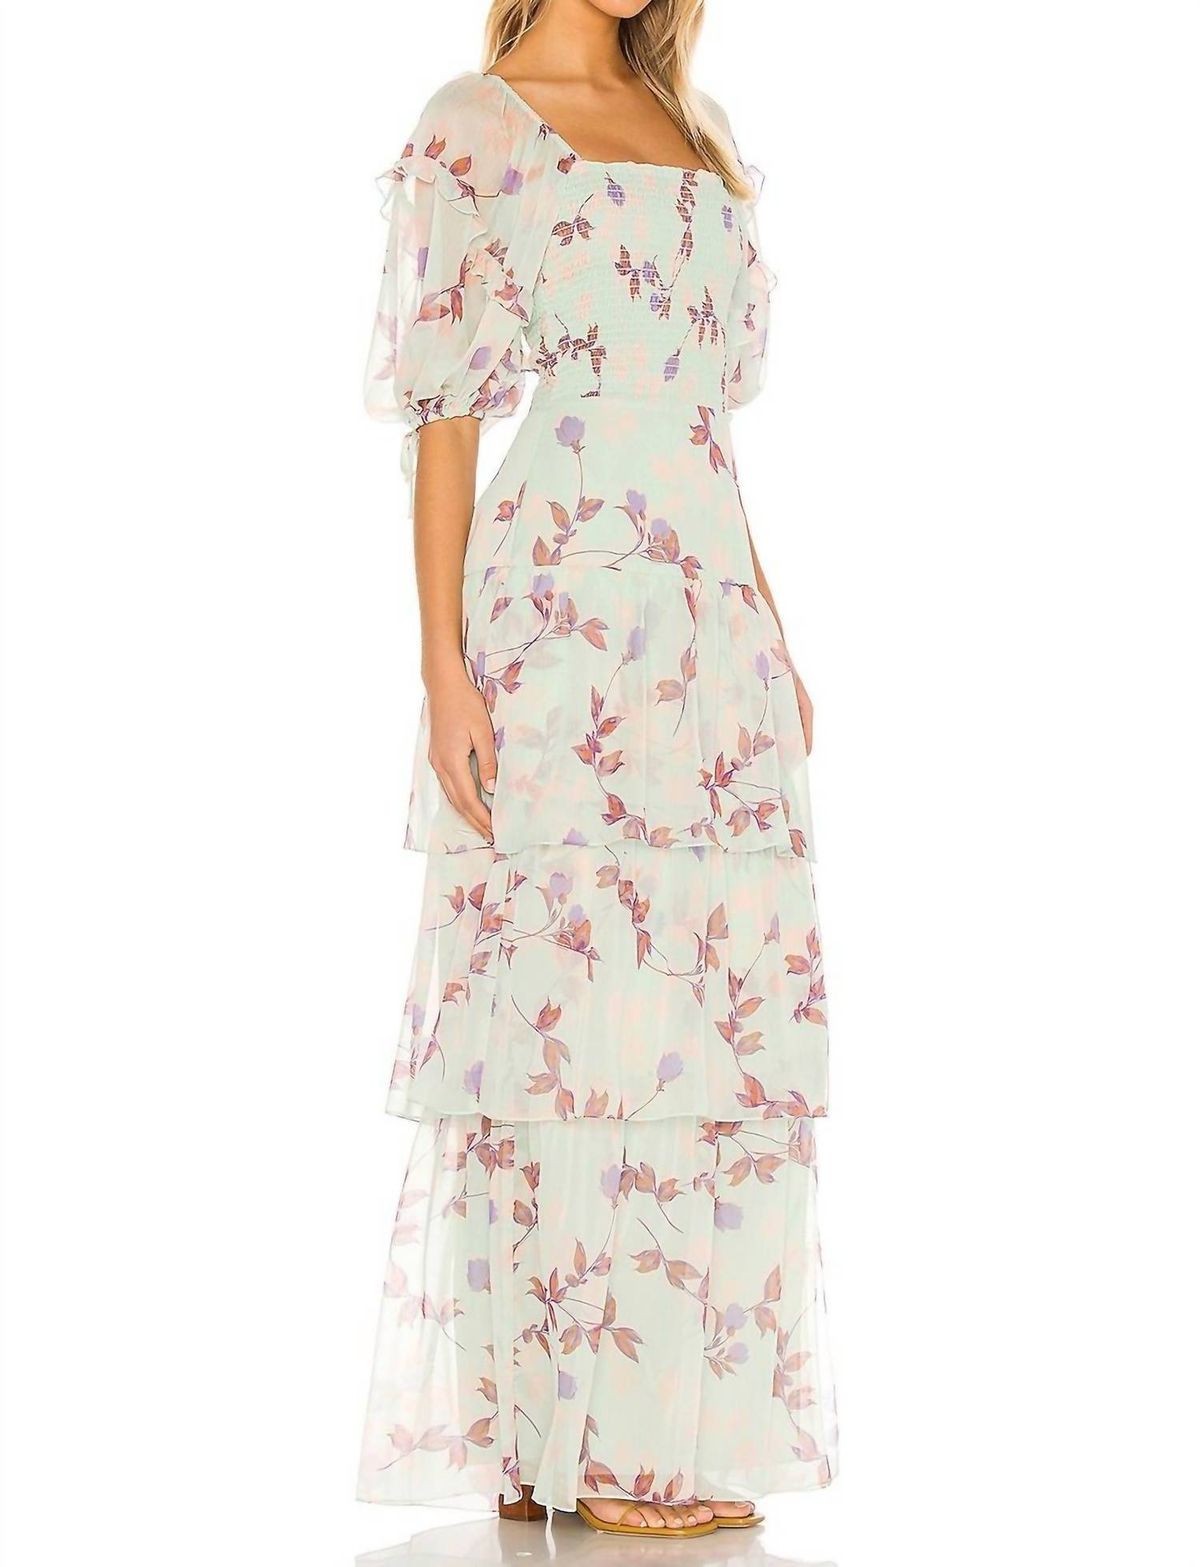 Style 1-1744470884-3855 Amanda Uprichard Size XS Sheer White Side Slit Dress on Queenly